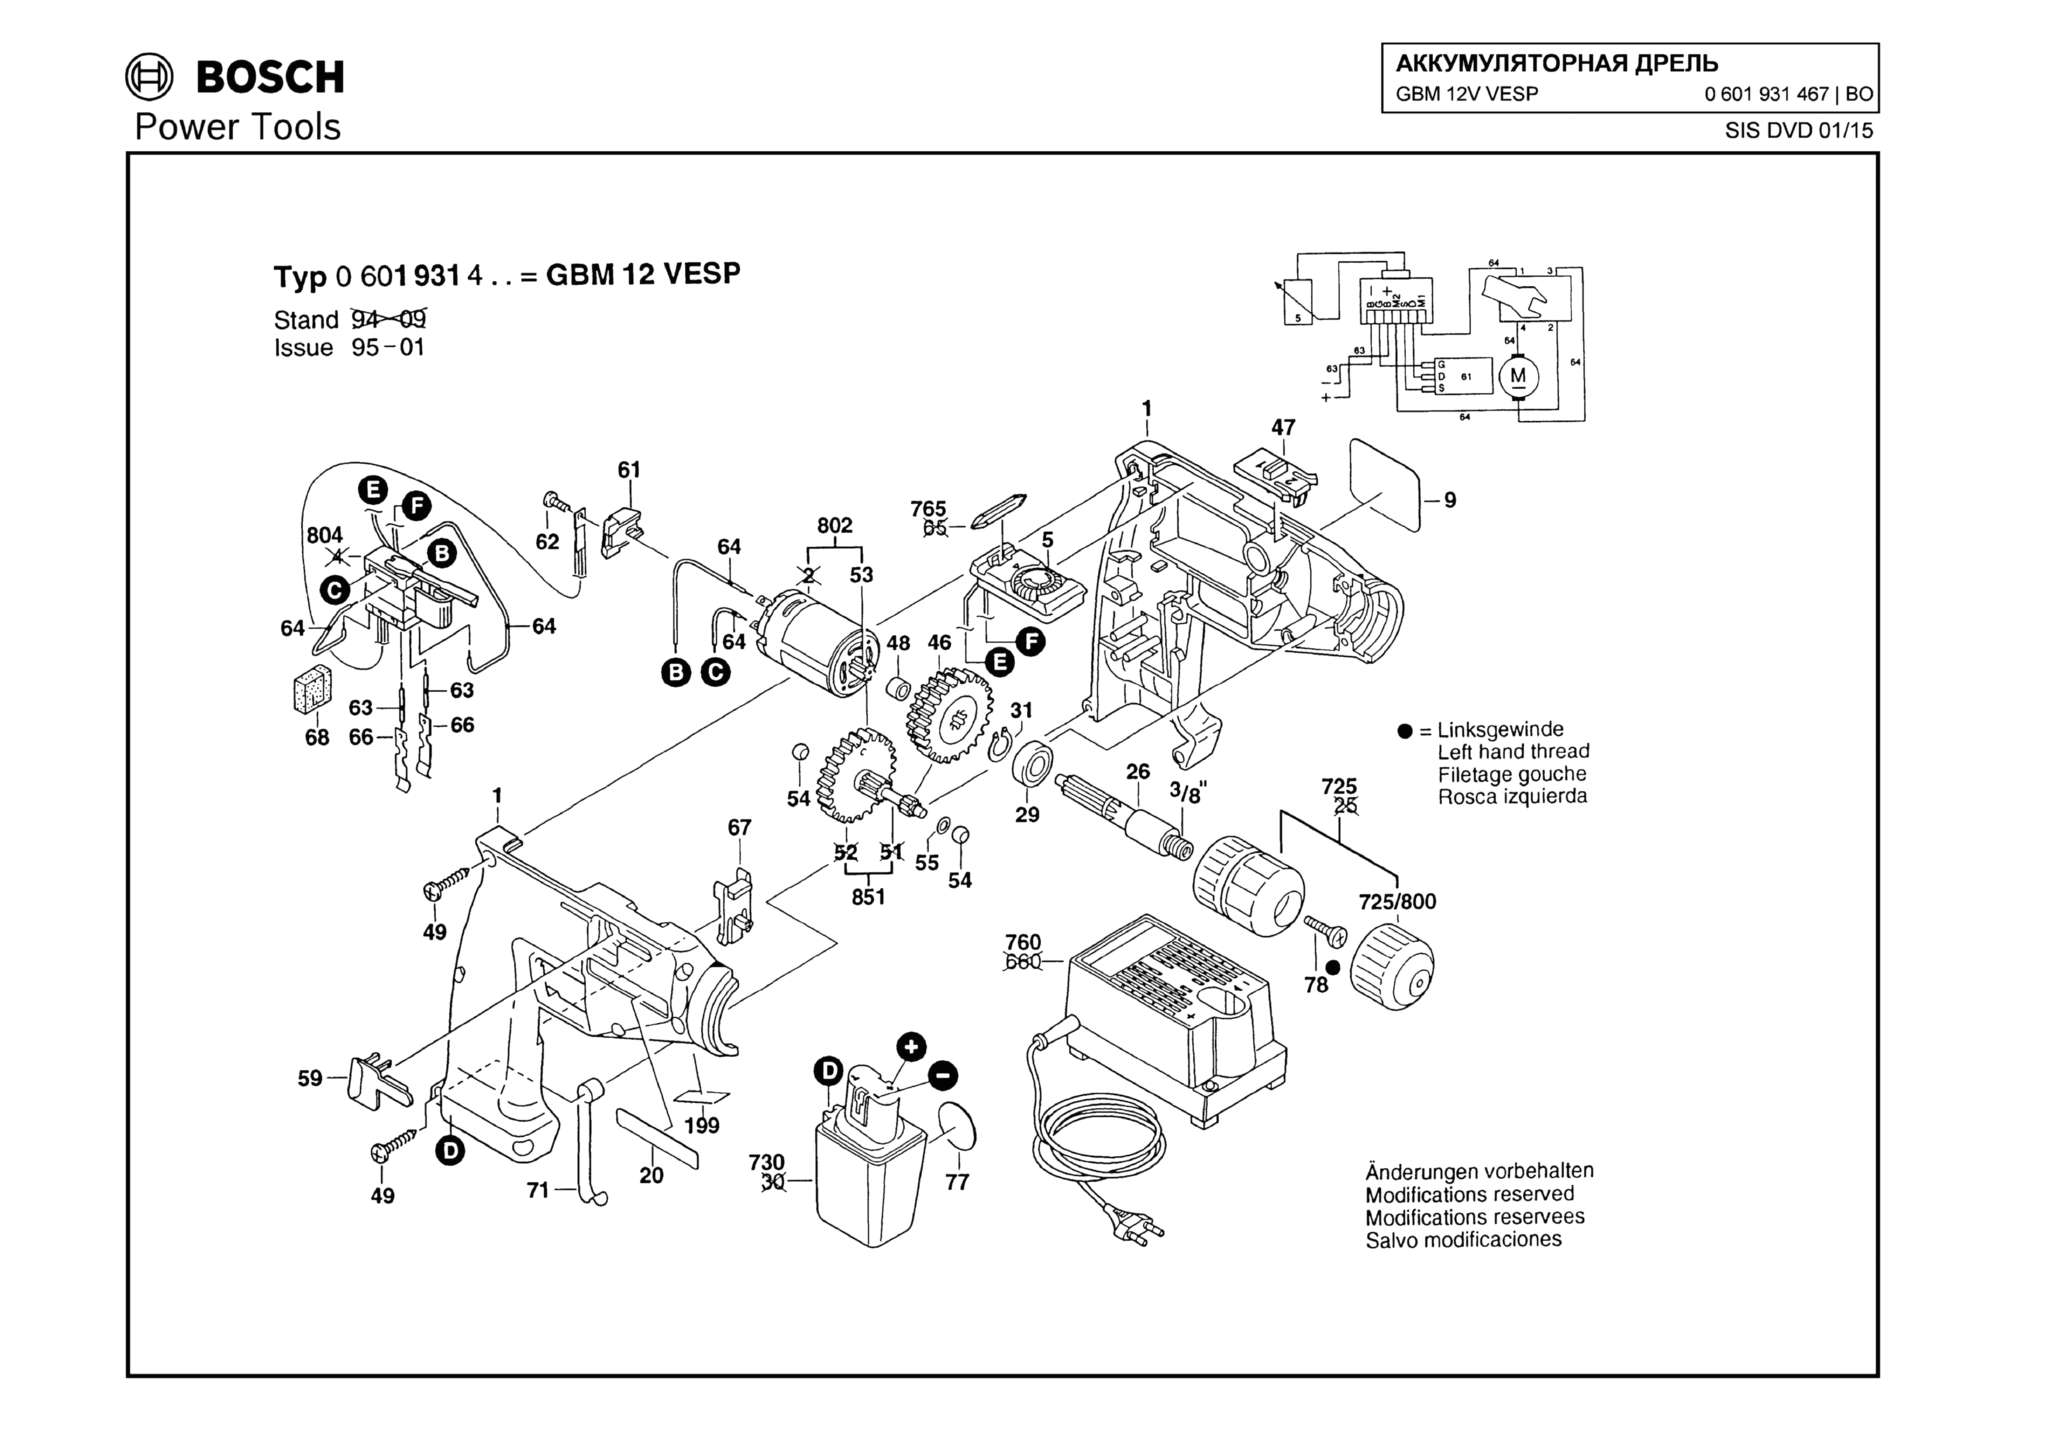 Запчасти, схема и деталировка Bosch GBM 12V VESP (ТИП 0601931467)